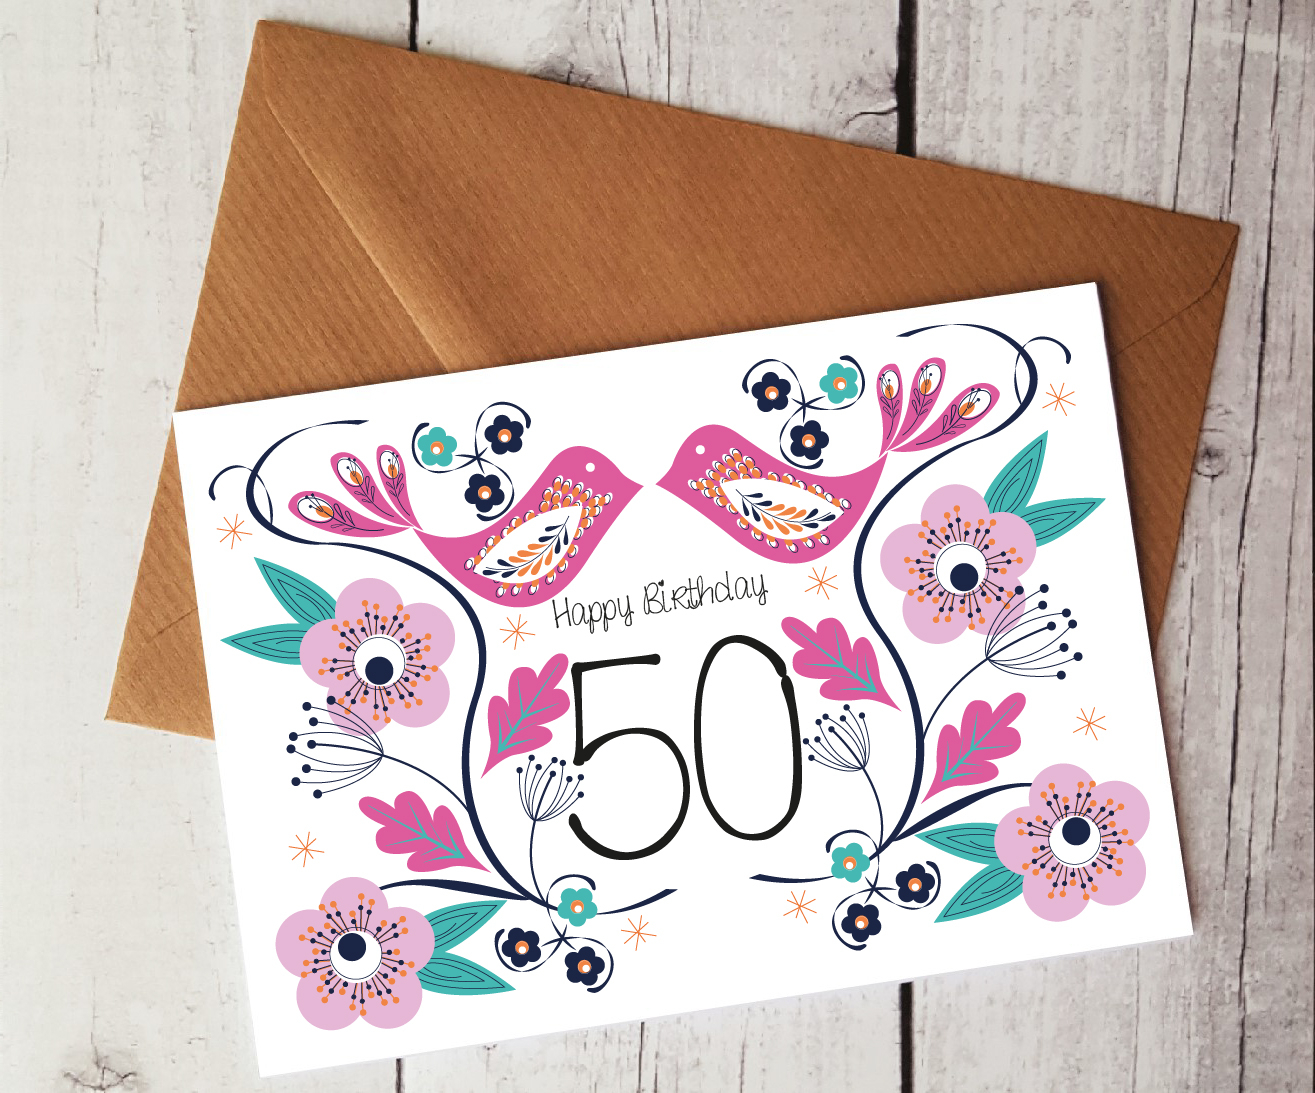 50 Birthday Card Ideas 50th Birthday Card